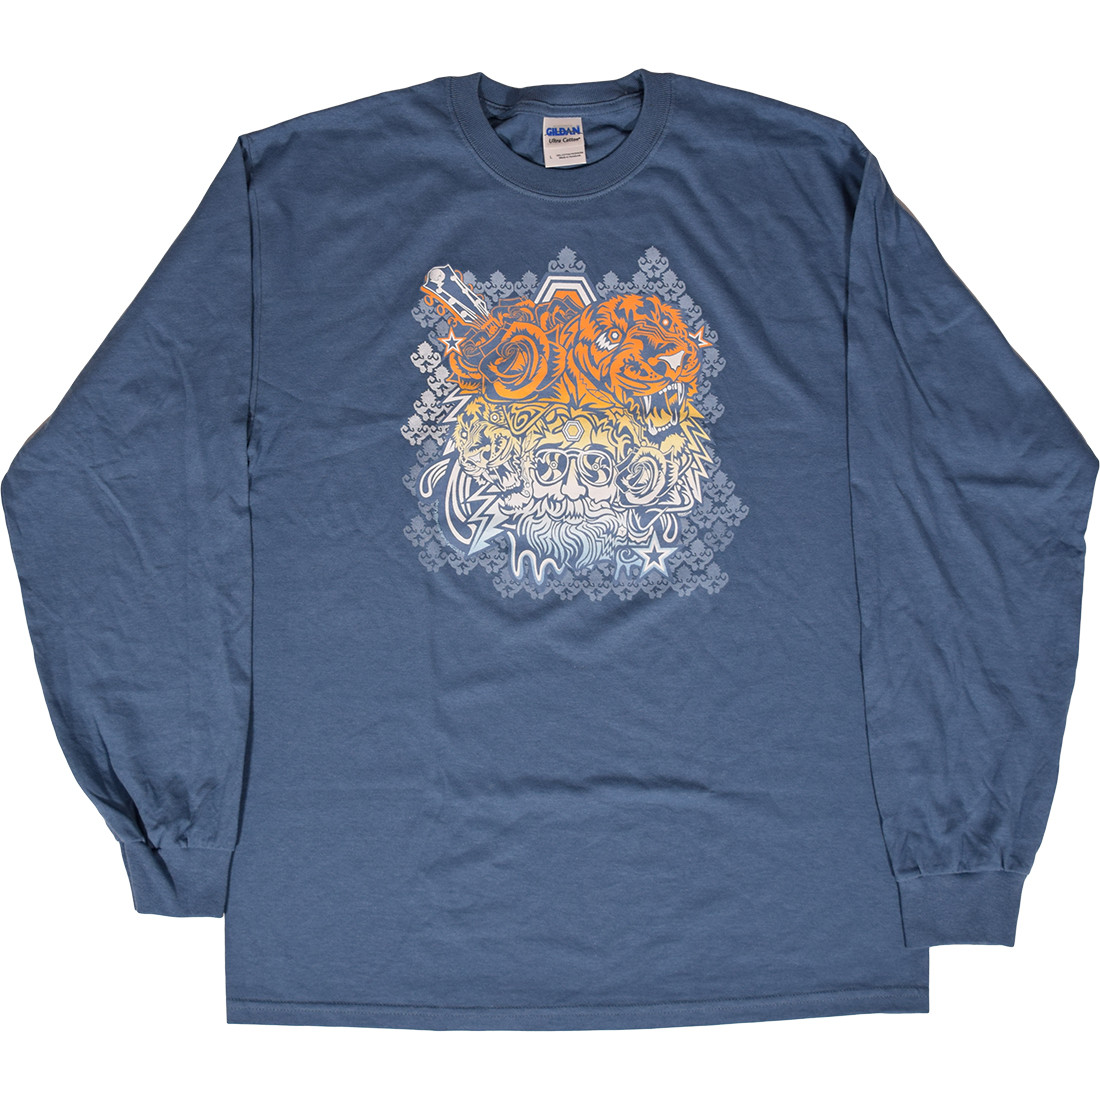 Jerry Garcia Tigers Blue Long Sleeve T-Shirt Tee Liquid Blue.